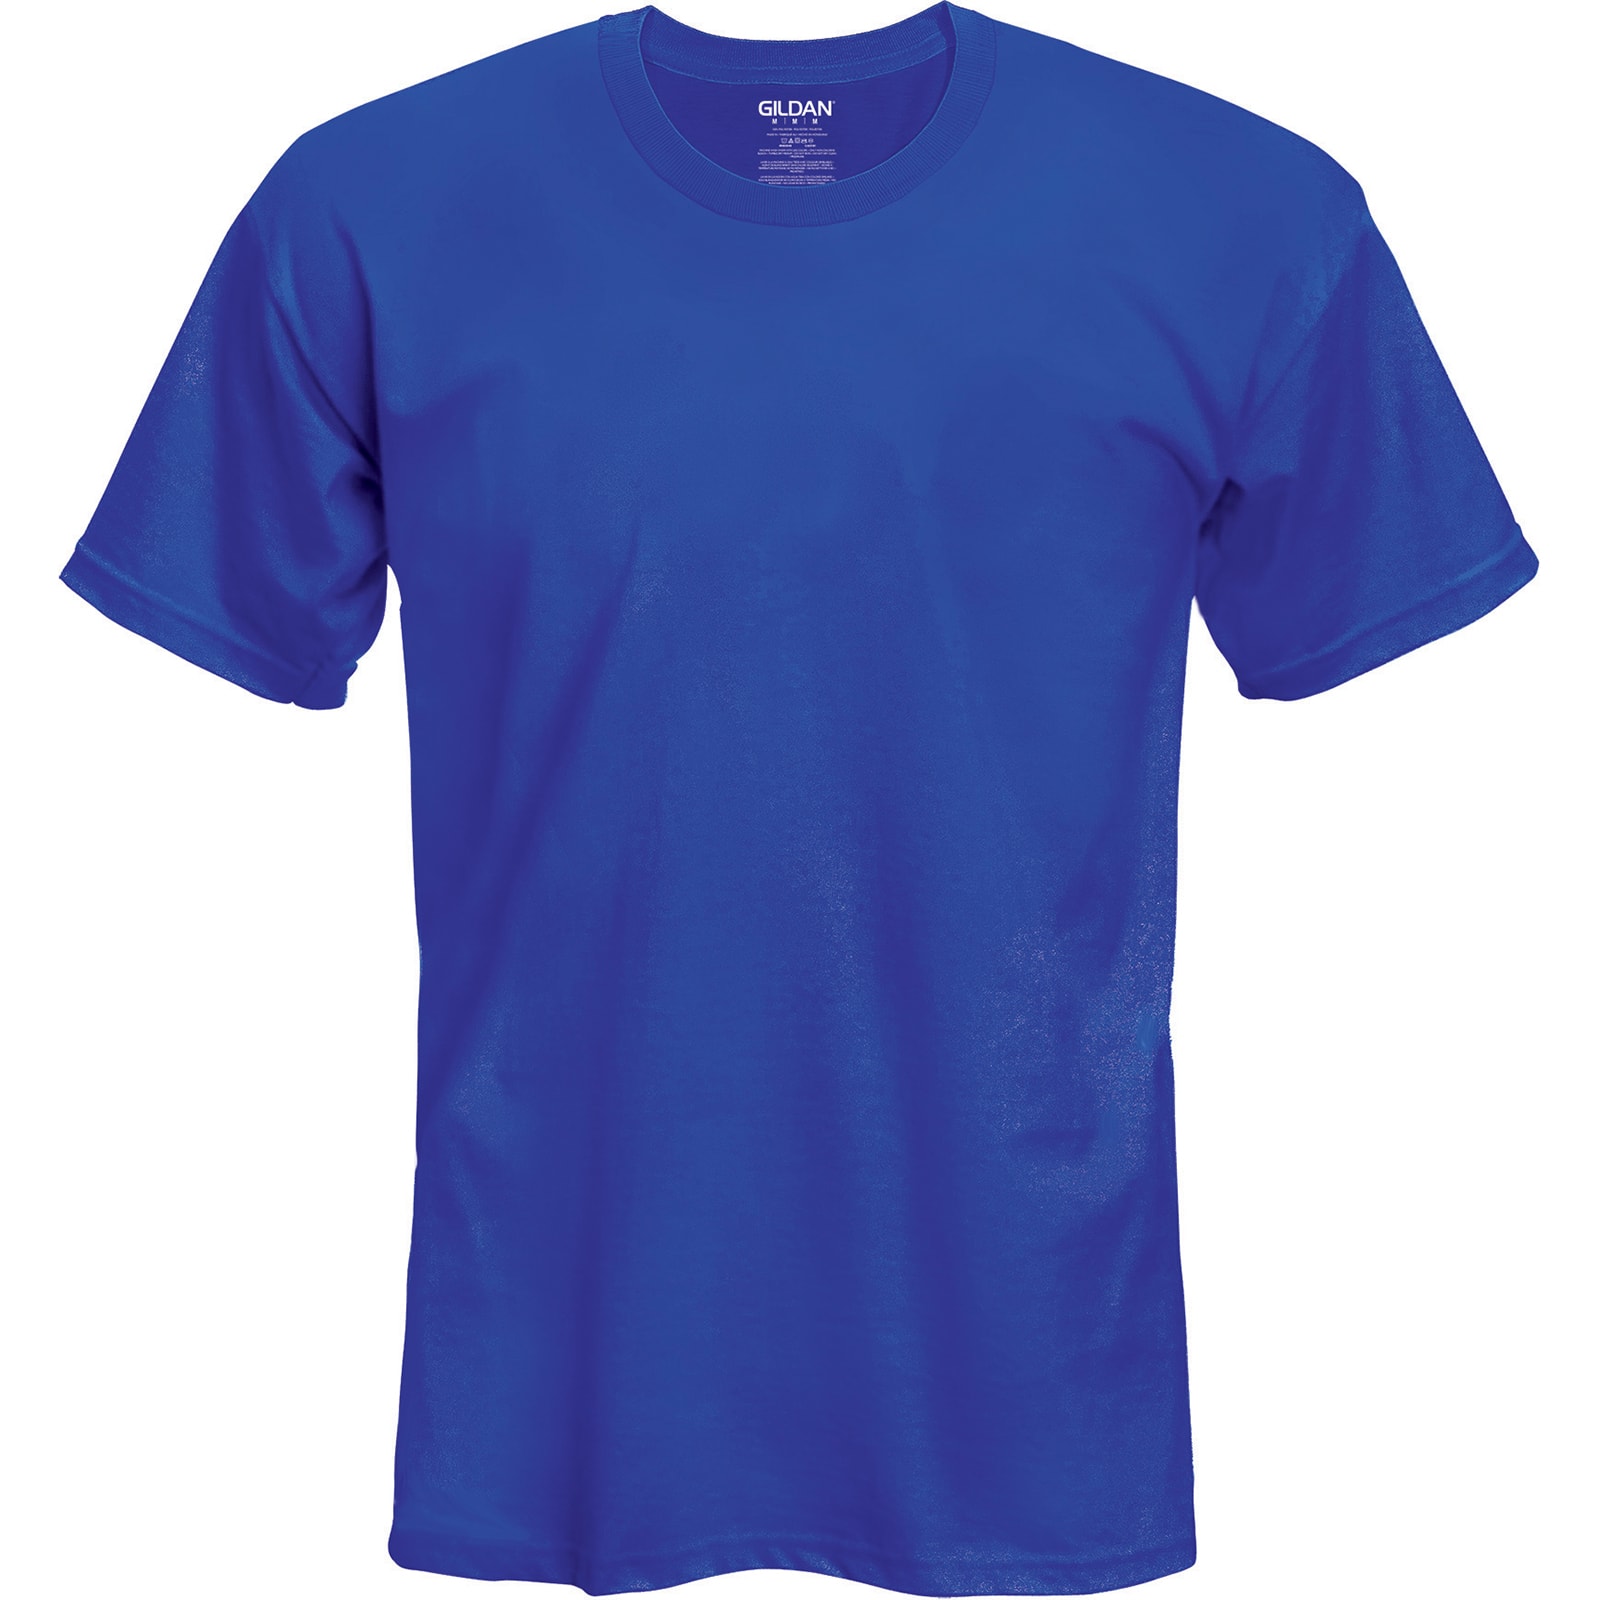 Unisex Cotton T-Shirt Blank for Heat Transfer Vinyl Men's Crew Neck Black T-Shirts for HTV Add-On Design Option Plus Sized T Shirt